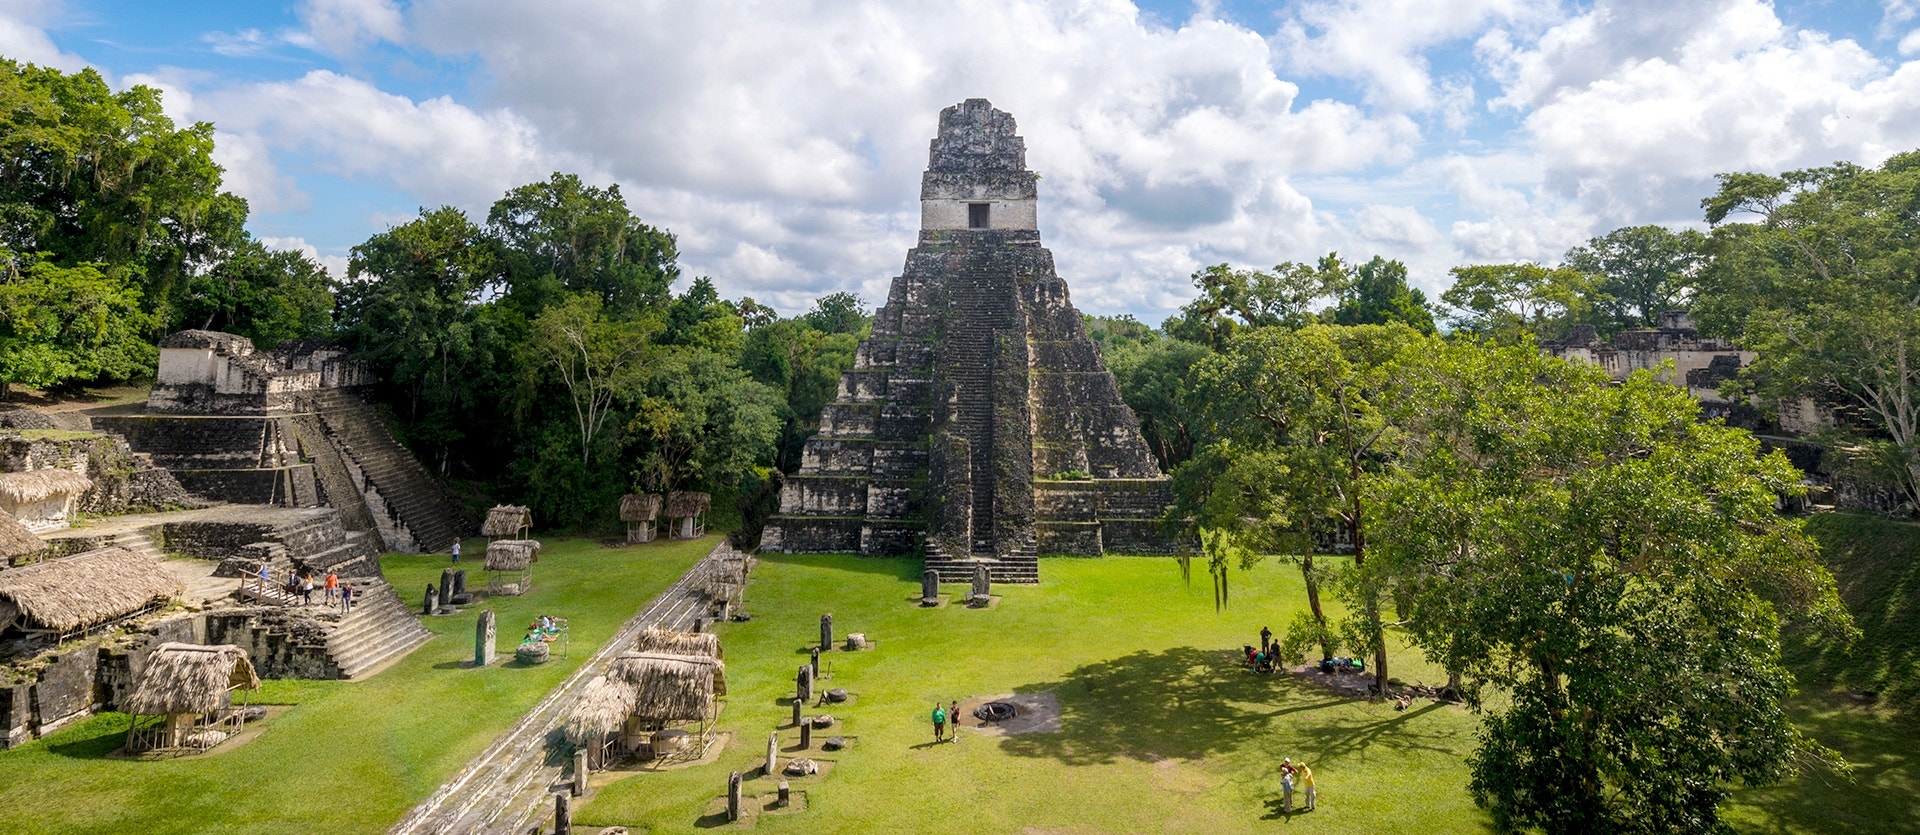 Antigua, Atitlan & Tikal's Mayan Ruins